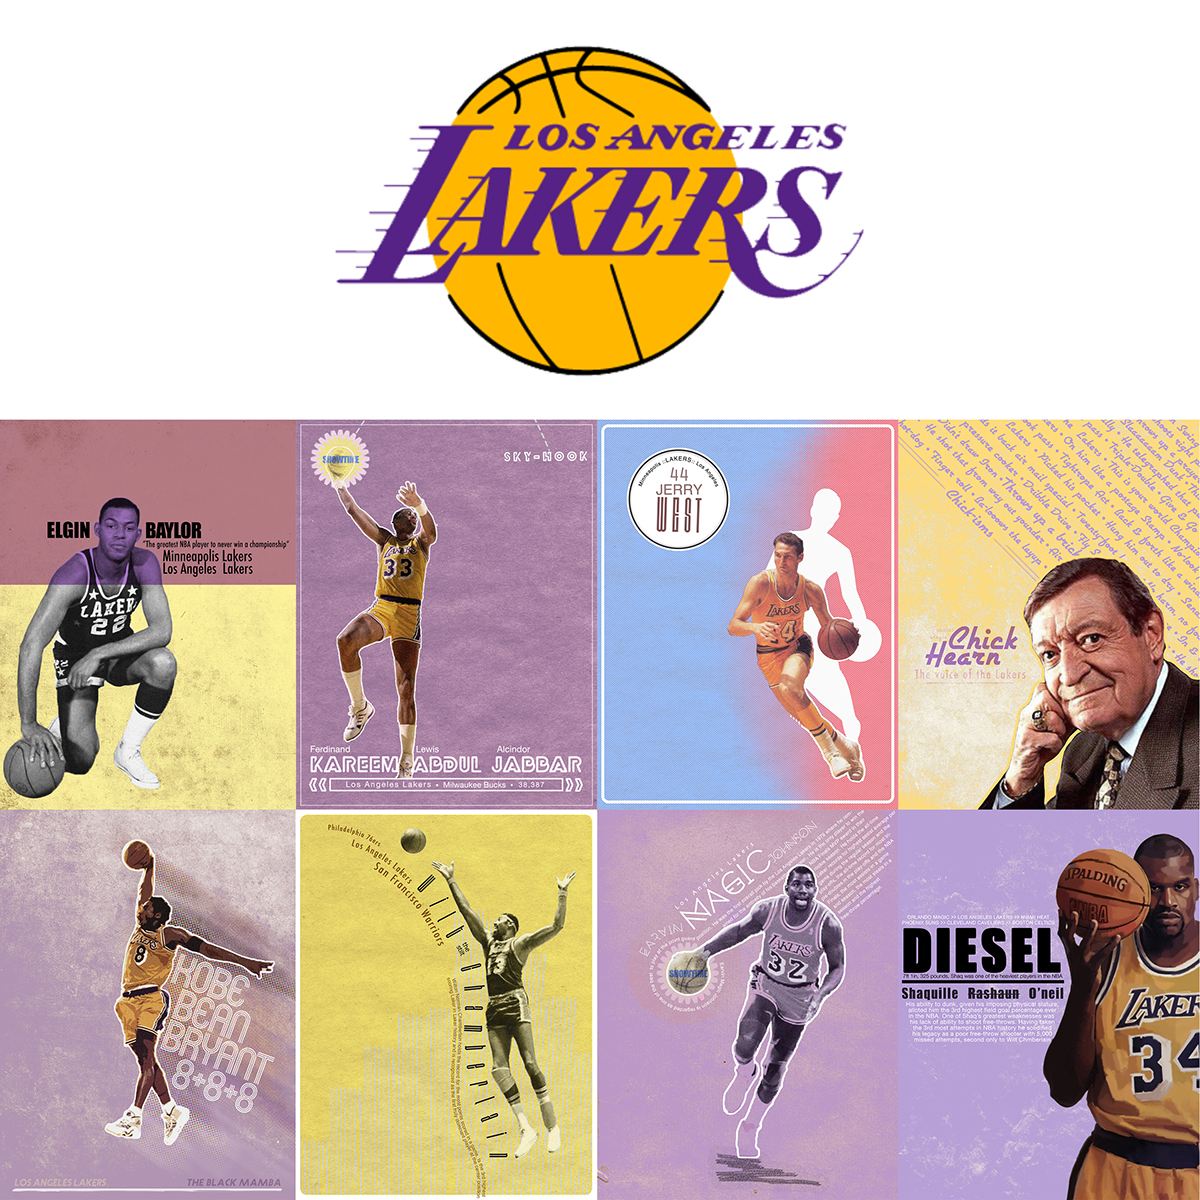 Los Angeles Lakers Lakers Laker Legends NBA Shaquille O'neil chick hearn wilt chamberlain Elgin Baylor Kobe Bryant Jerry West MAGIC JOHNSON Kareem Abdul Jabbar